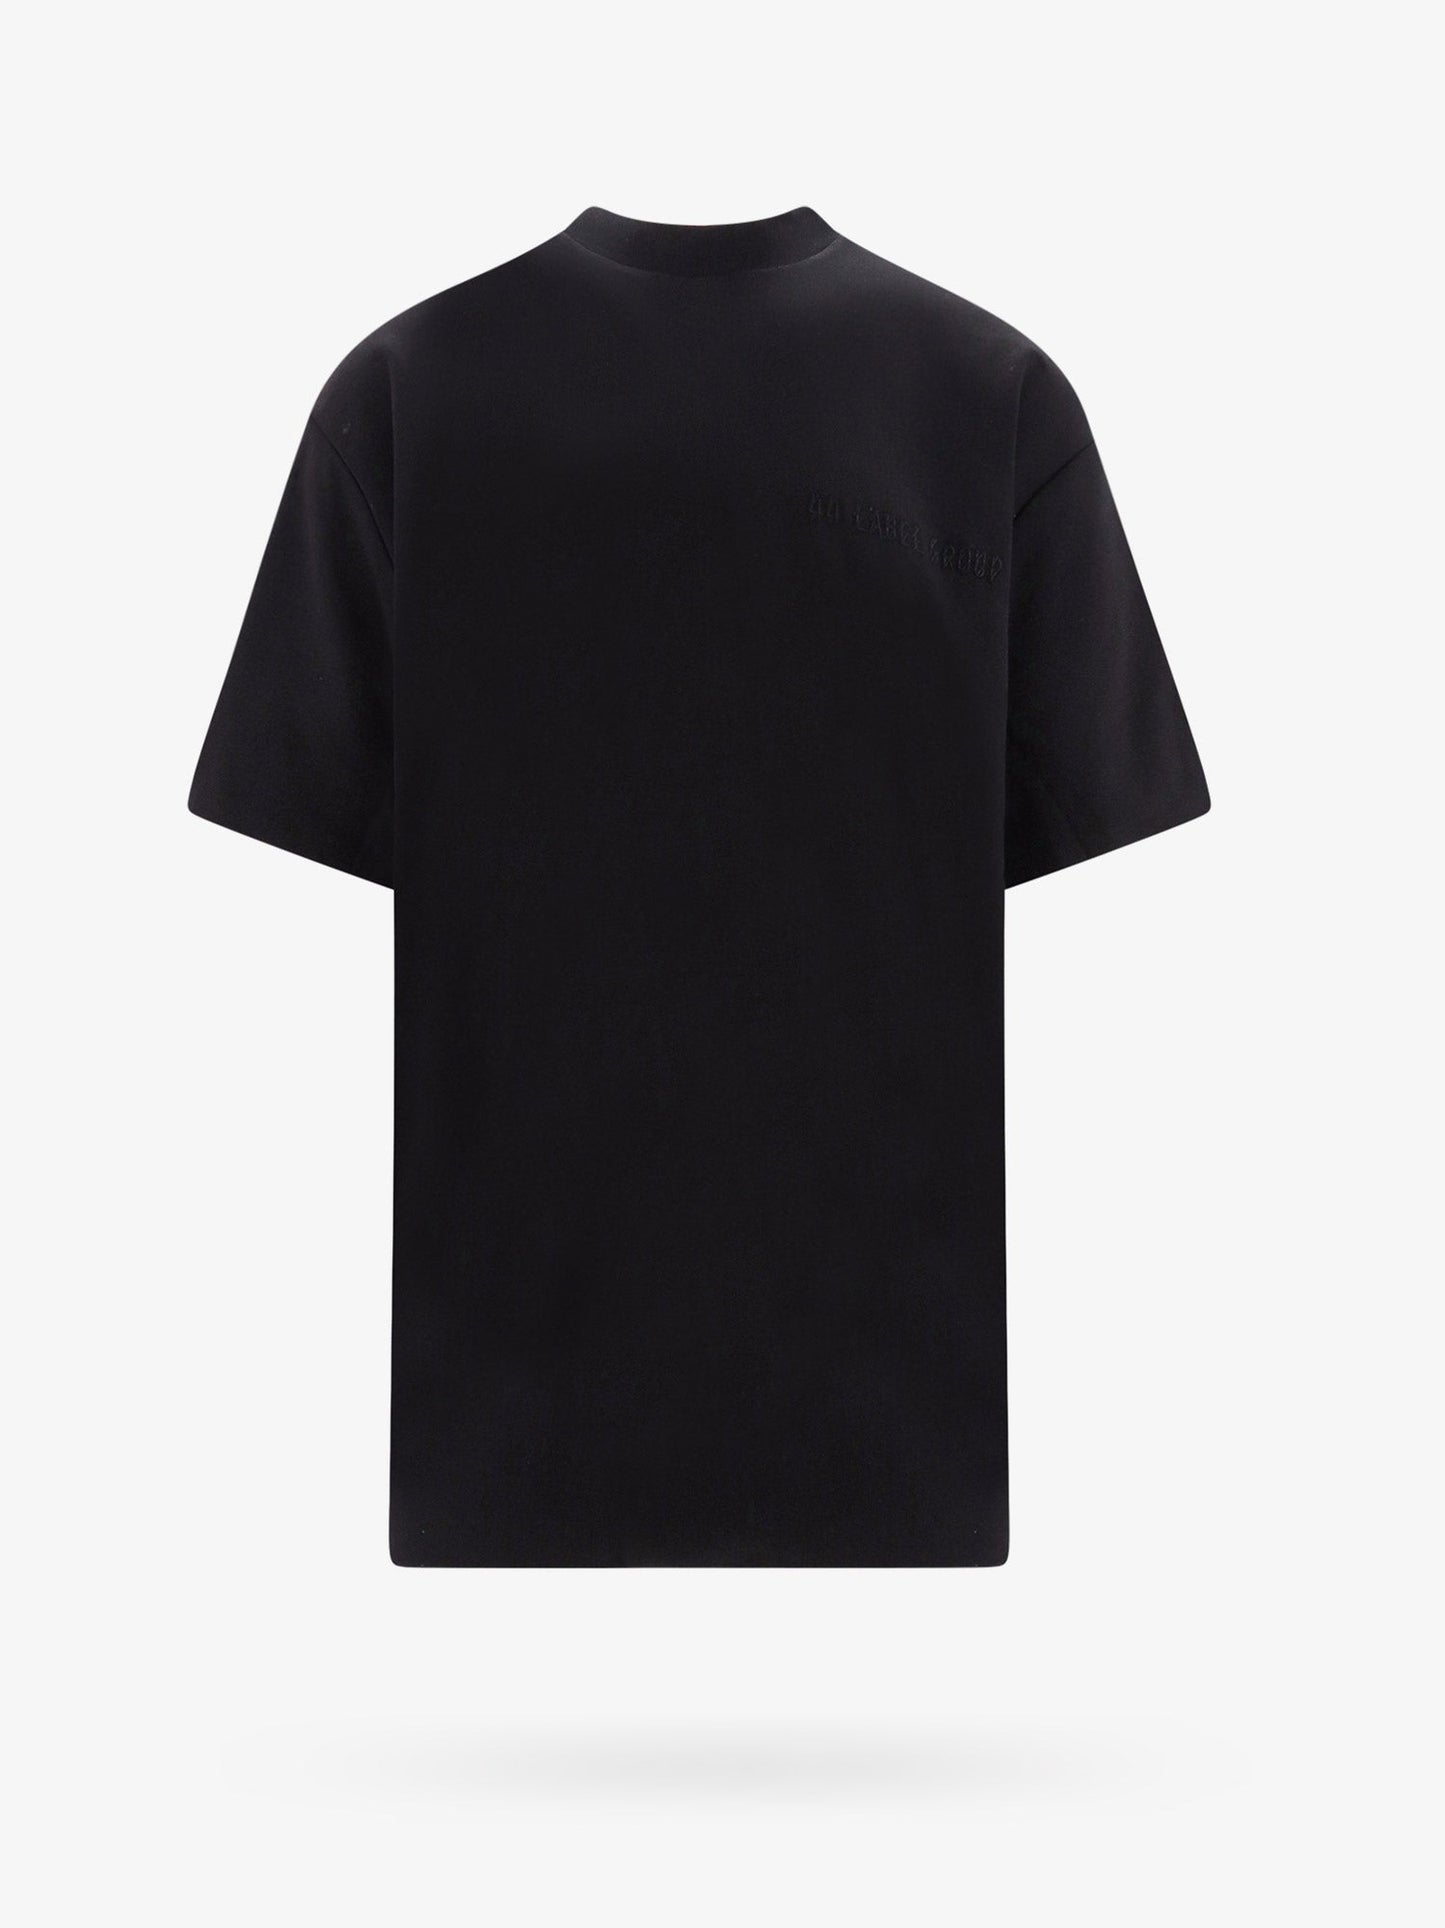 44 Label Group Man T-Shirt Man Black T-Shirts